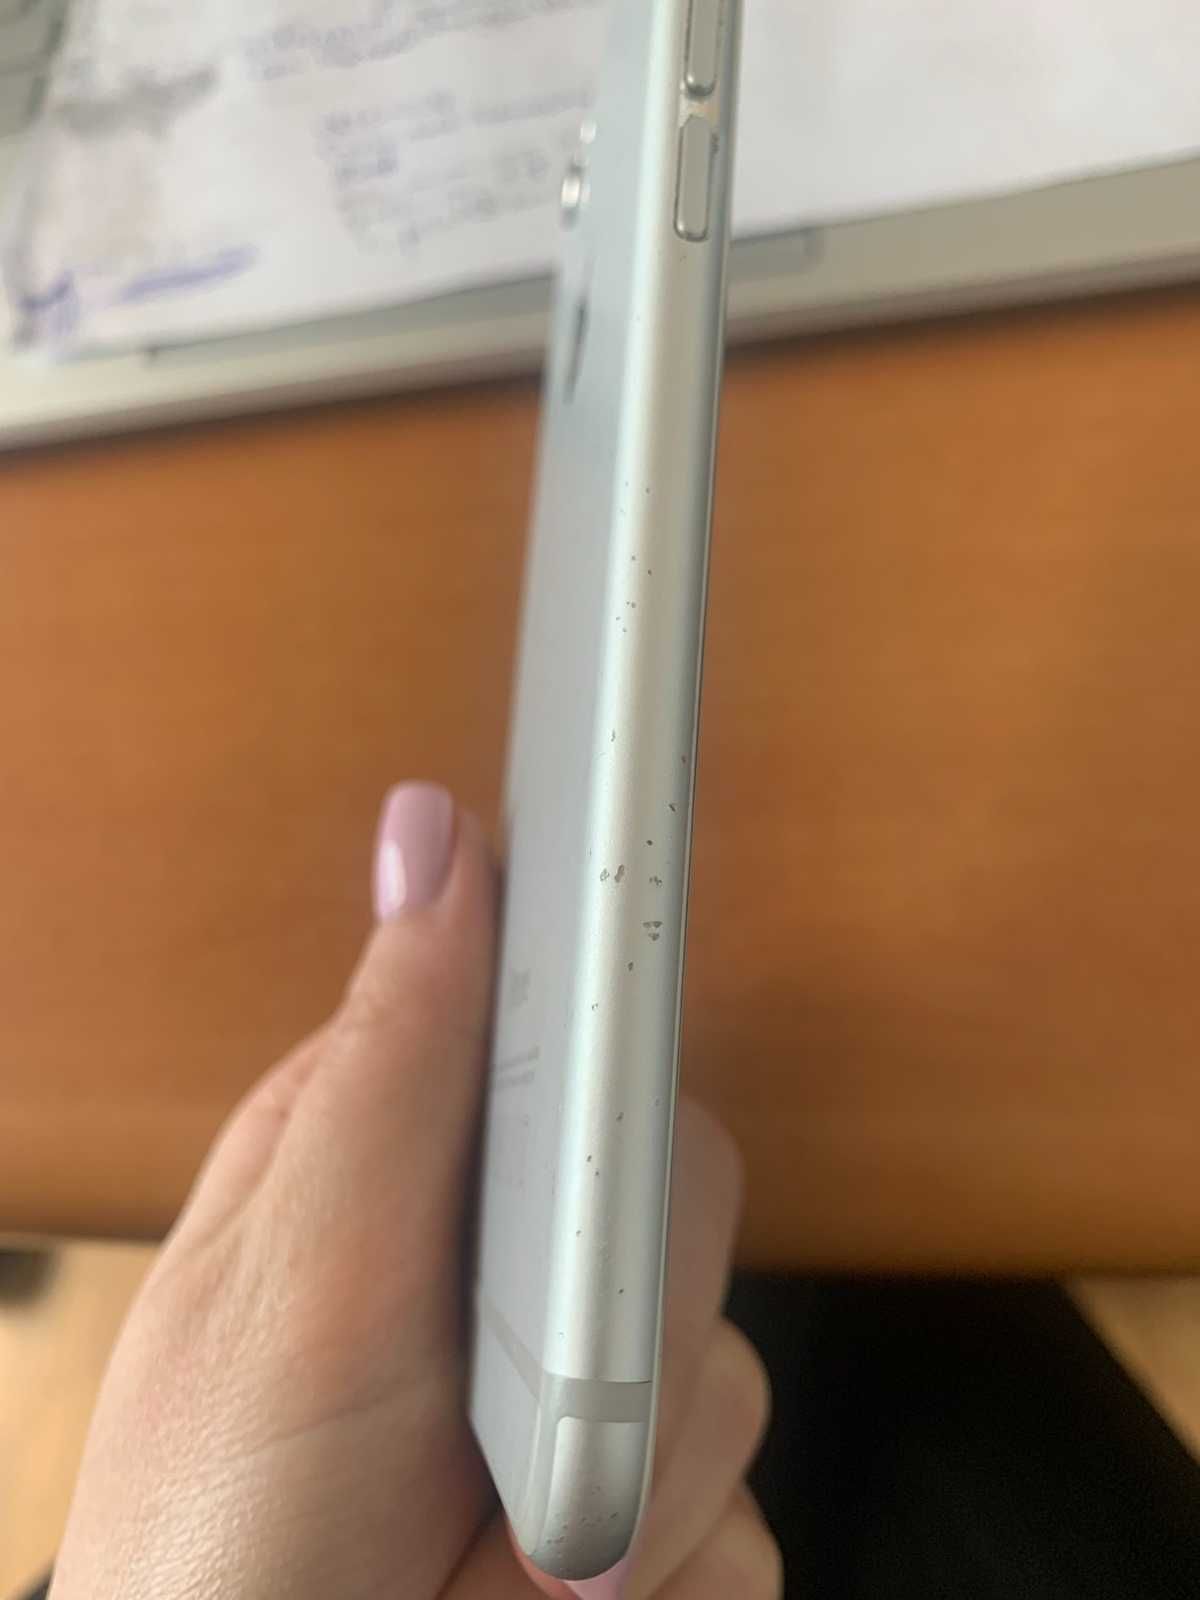 iPhone 6, 16 GB Space Gray (сребърен), 100% Battery Health